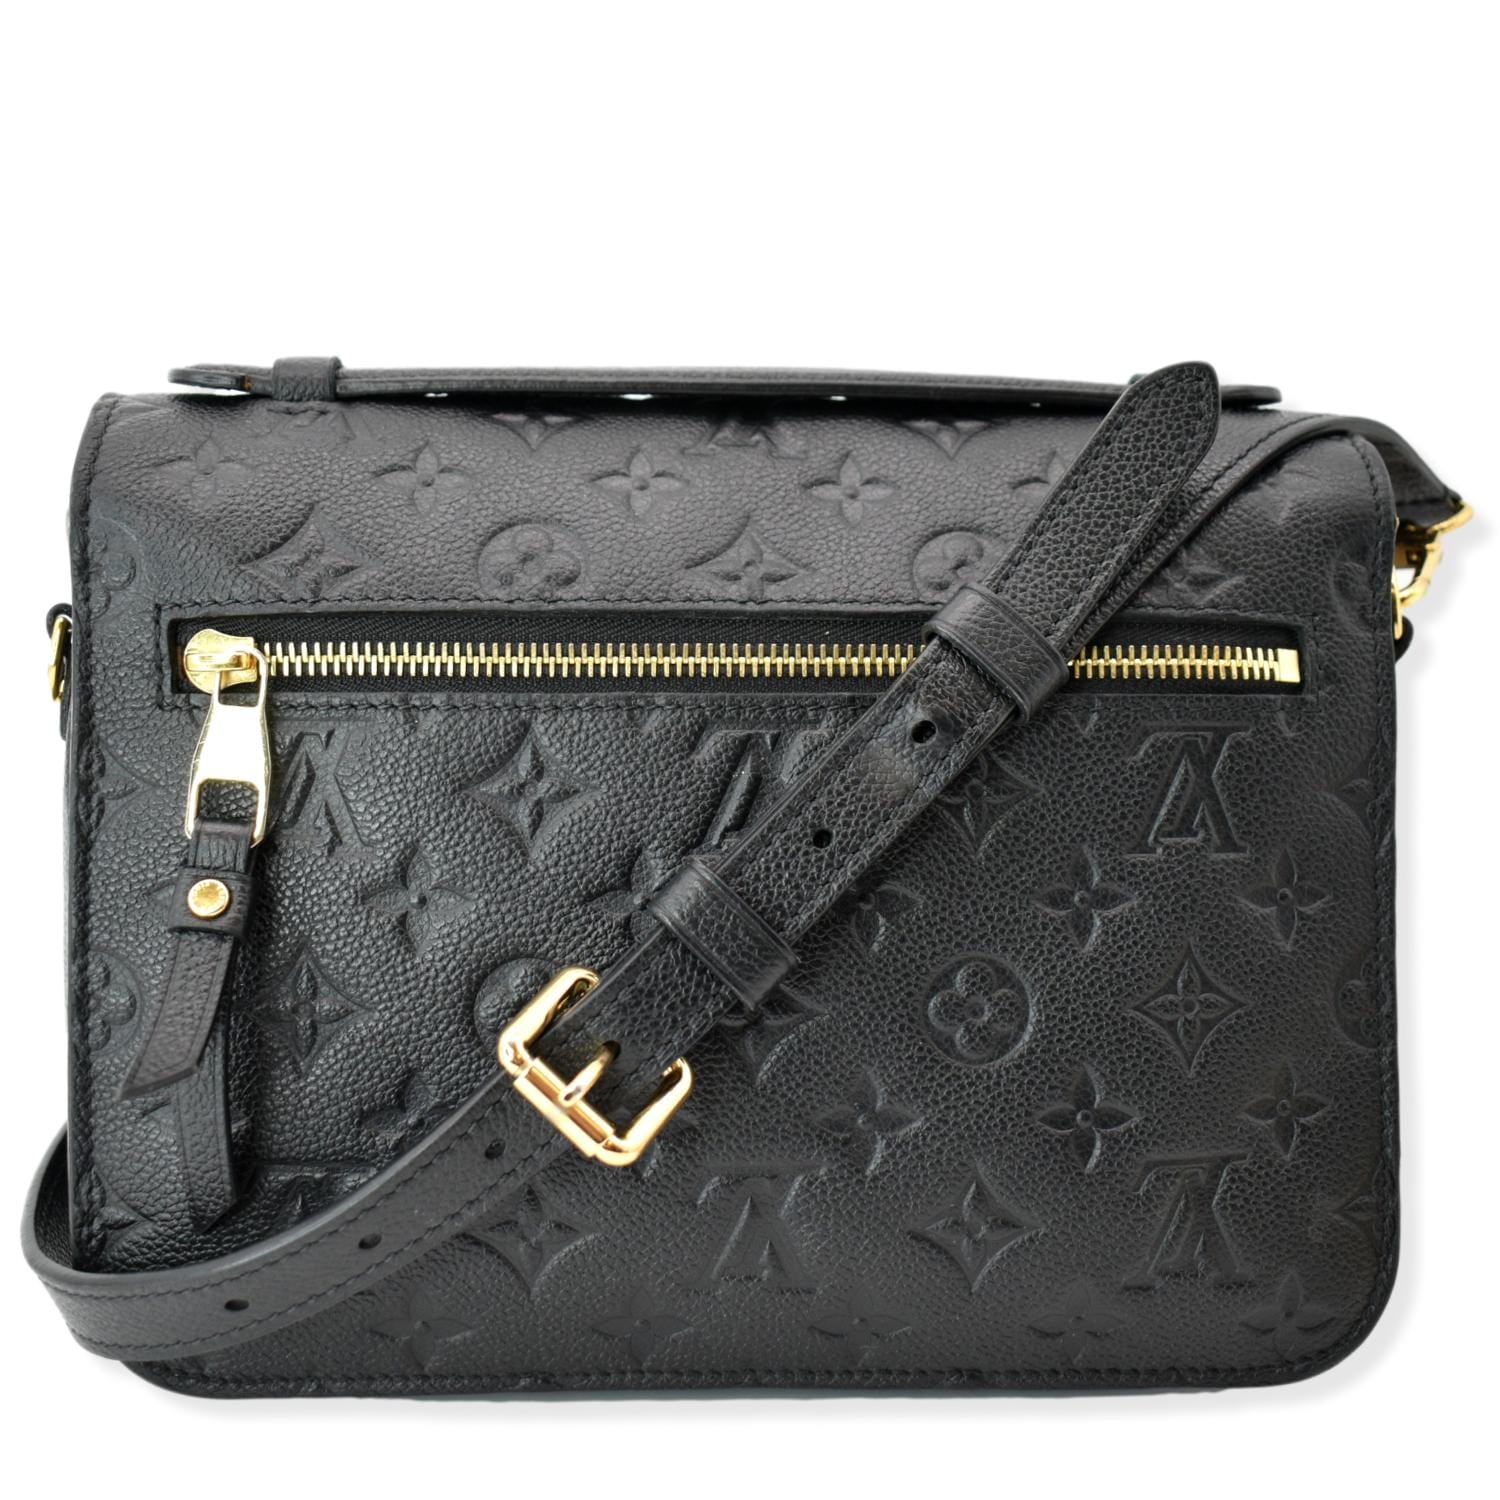 LV Louis Vuitton Black Leather Metis Sling Bag 100% AUTHENTIC+